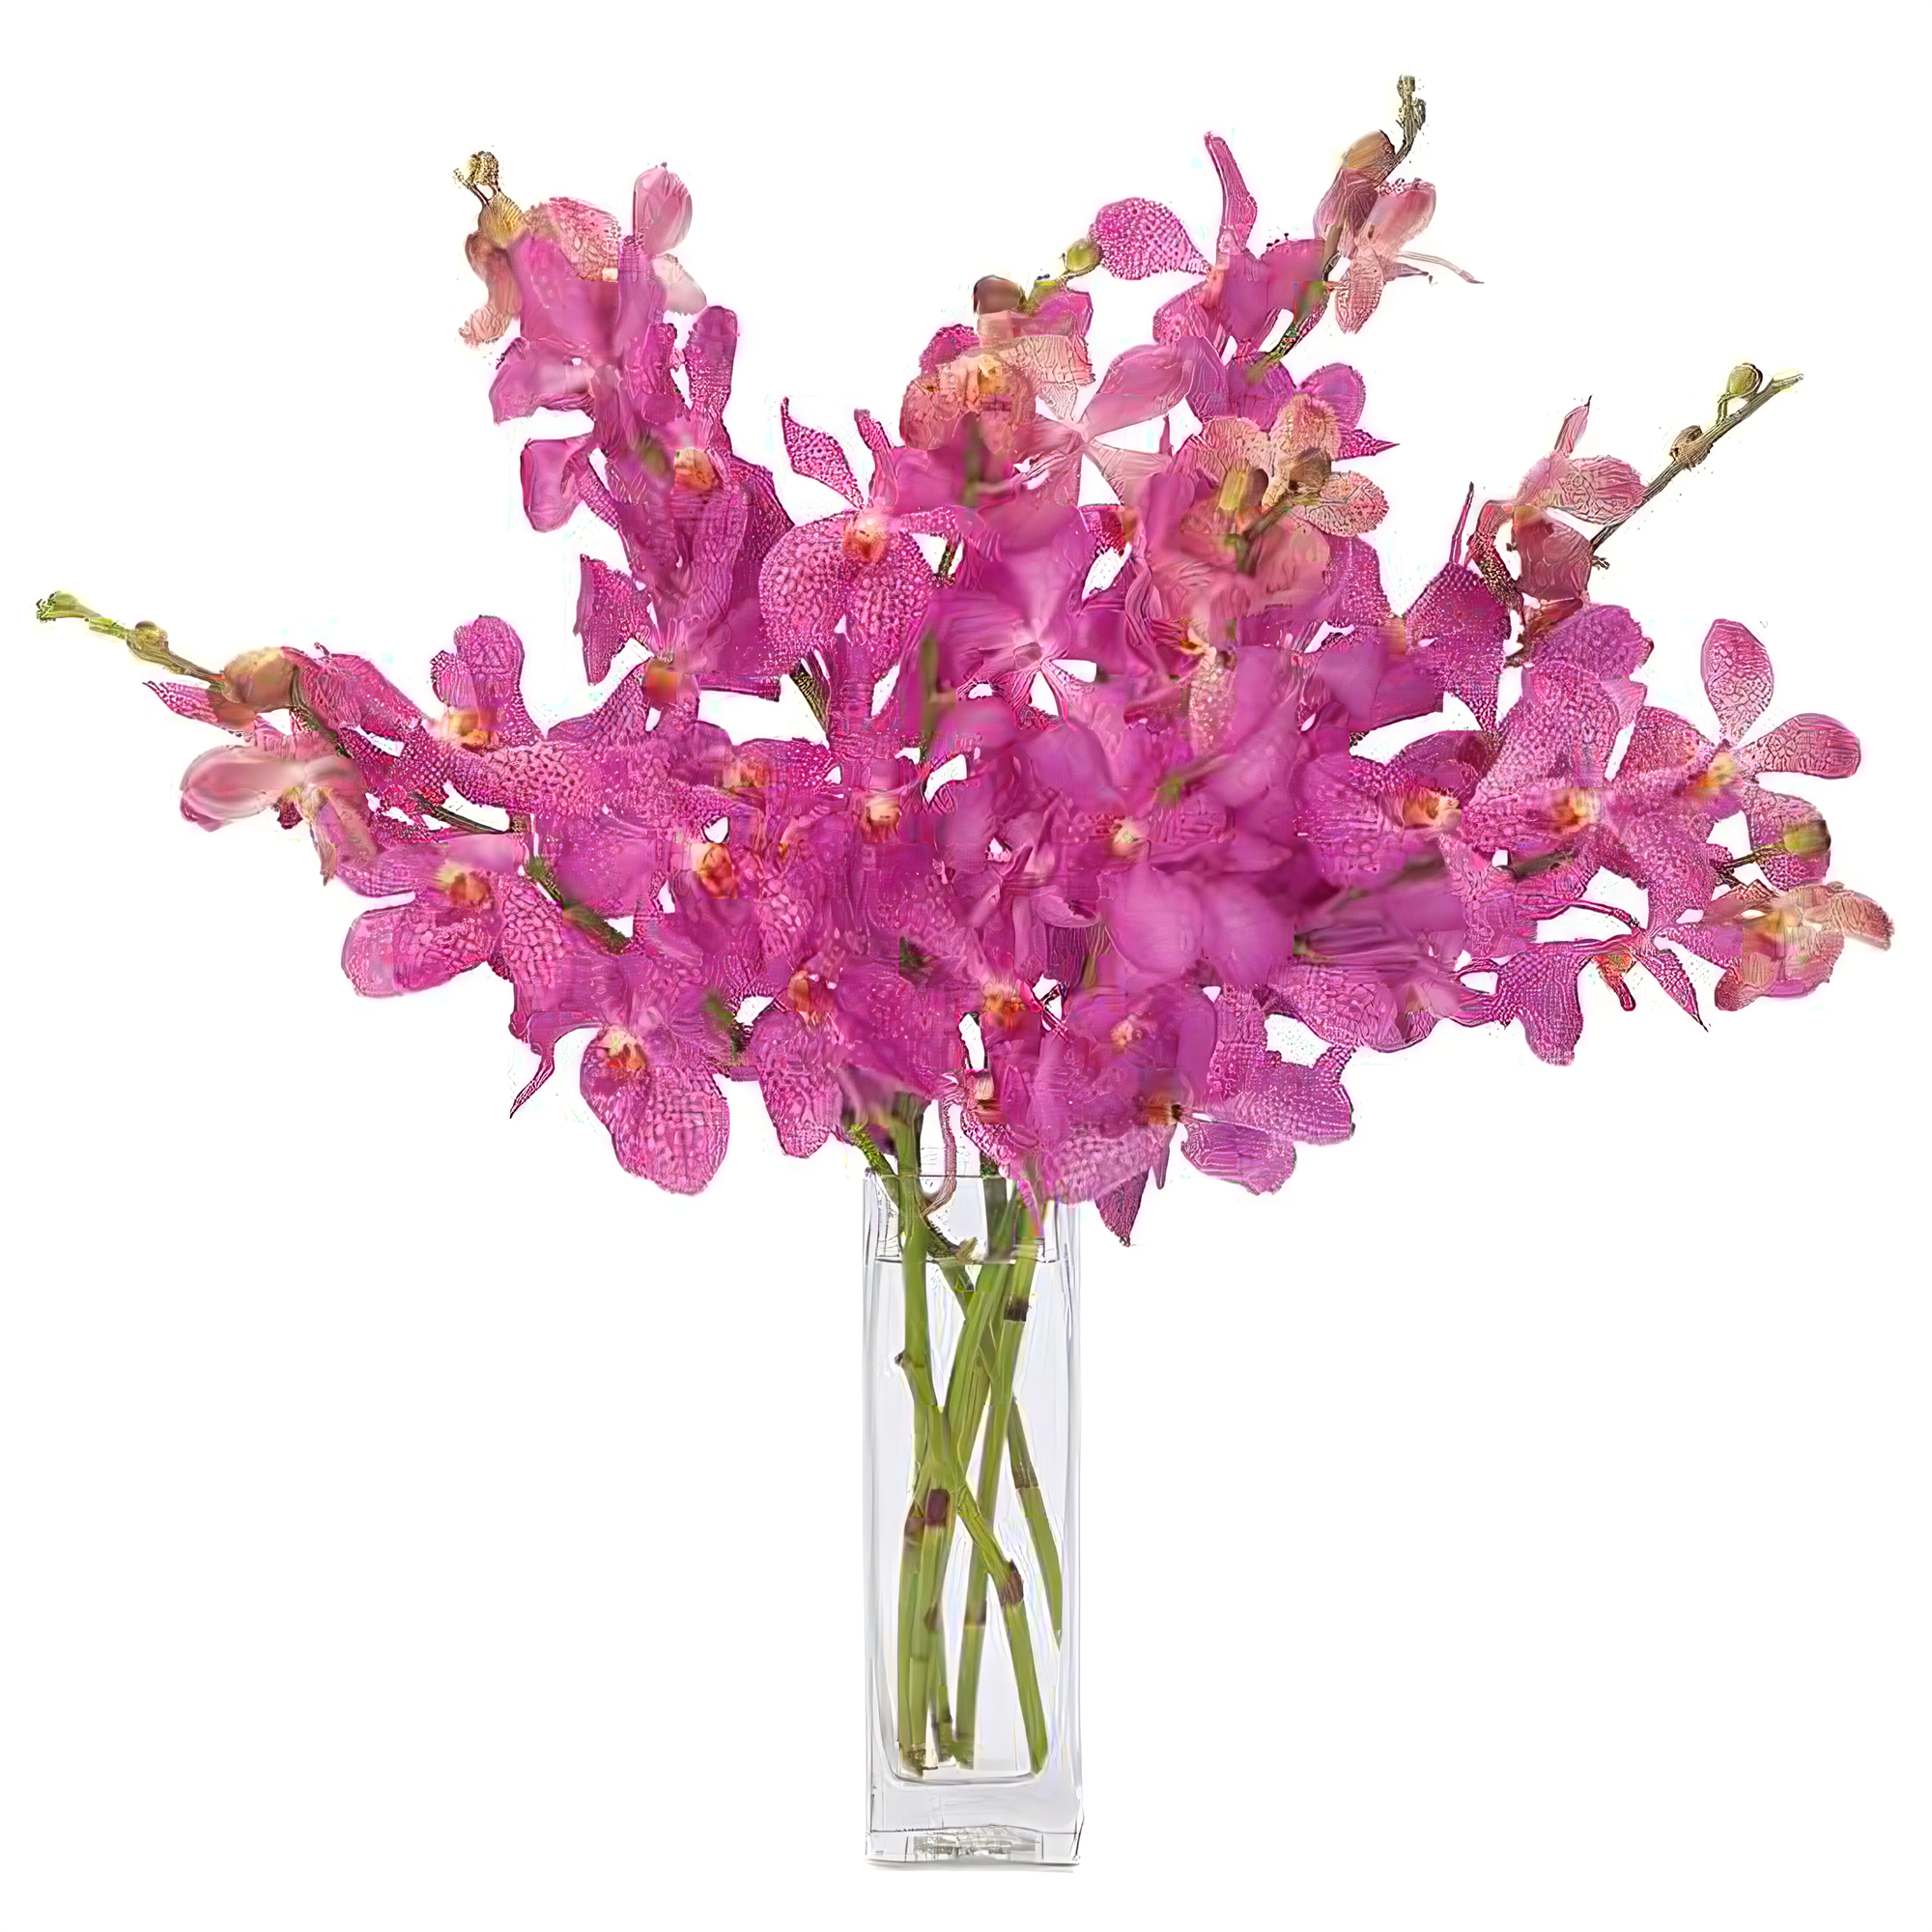 Vanda Orchid Spelndor - Occasions > Anniversary